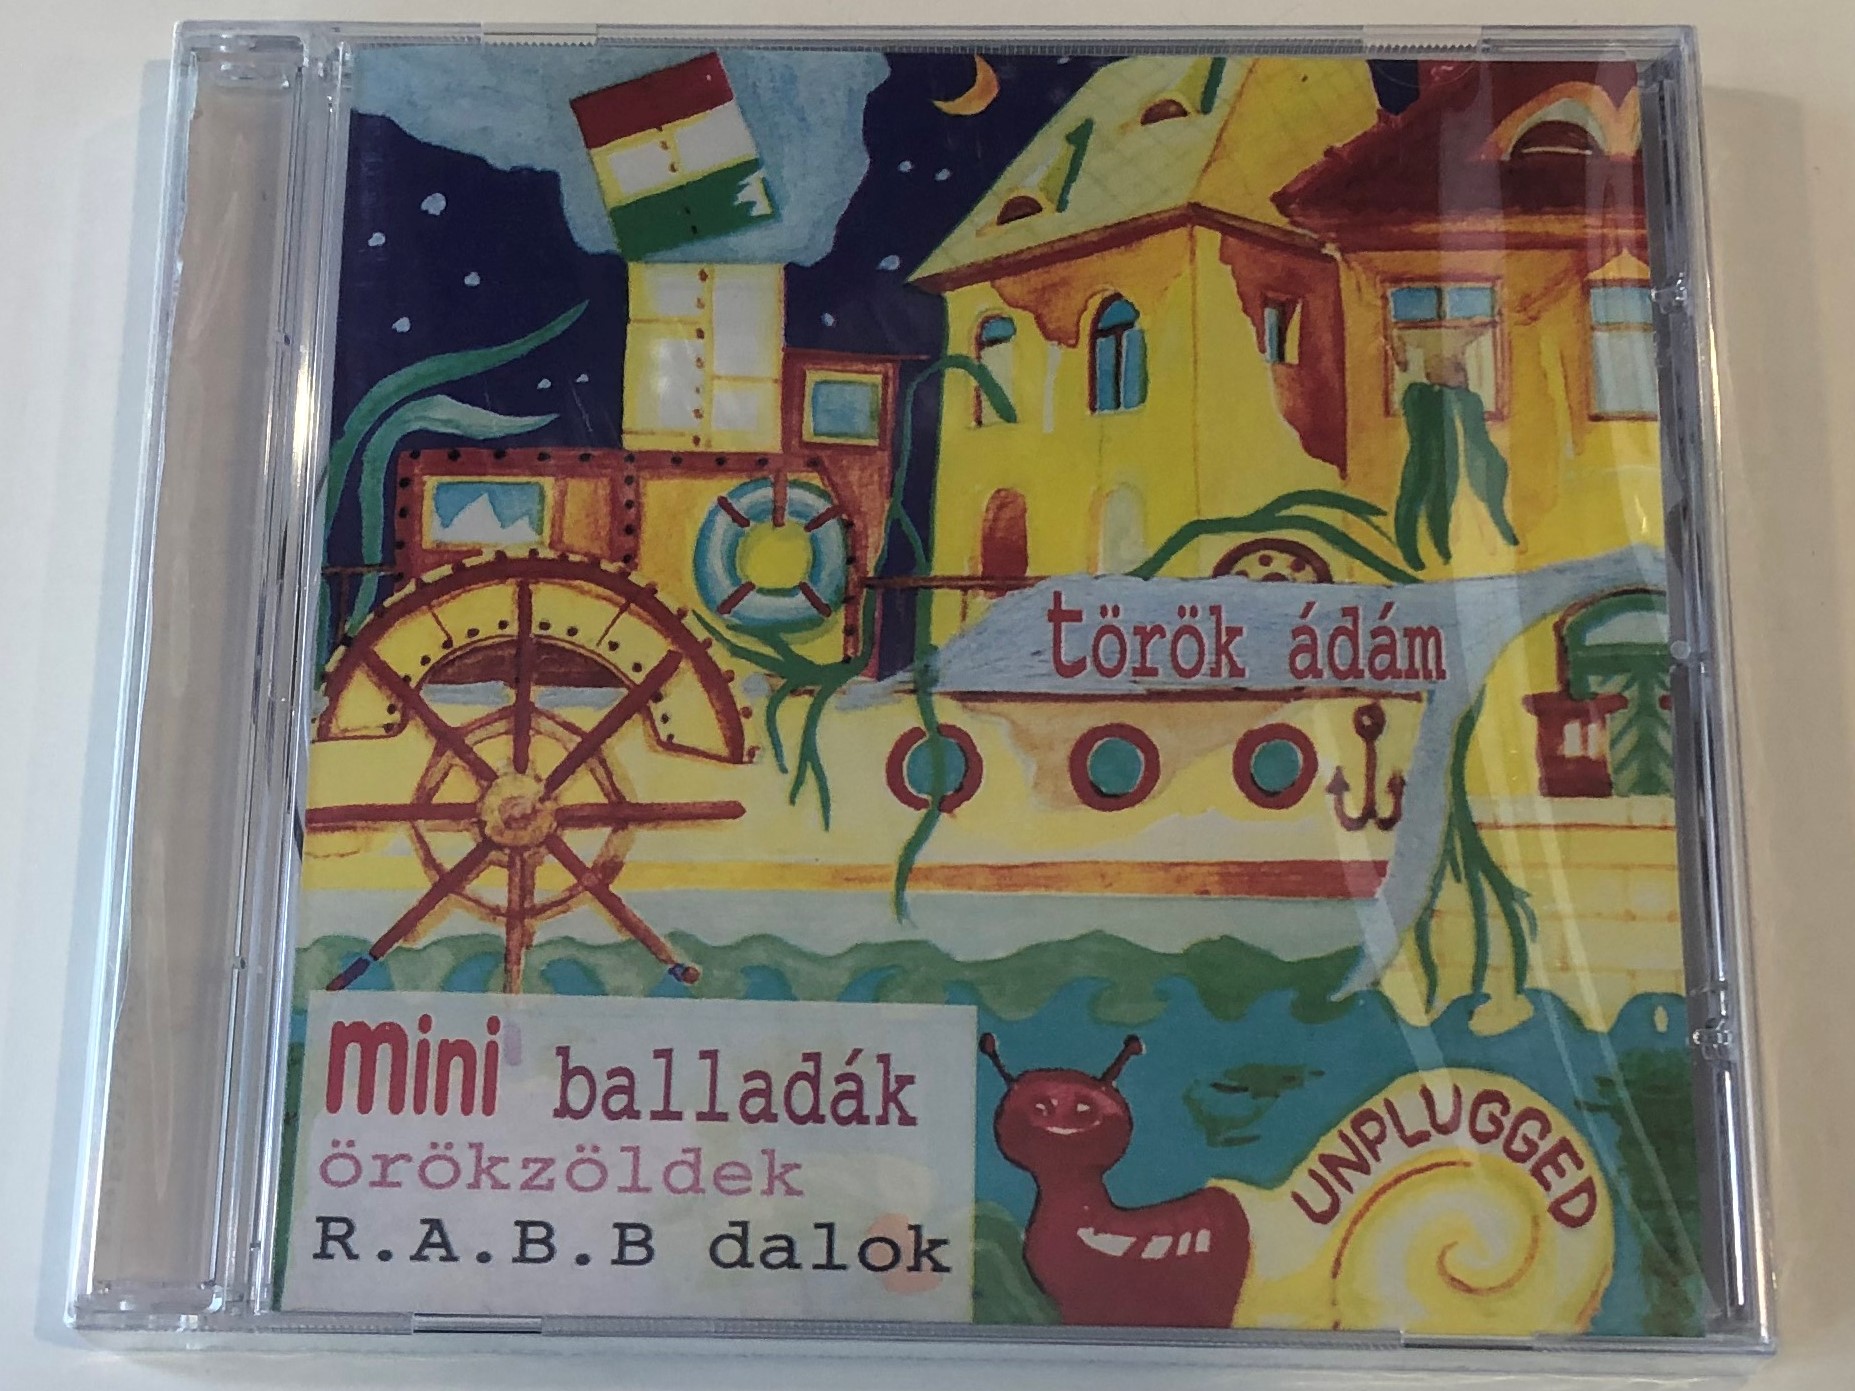 t-r-k-d-m-mini-ballad-k-r-kz-ldek-r.a.b.b.-dalok-periferic-records-audio-cd-5998272701525-1-.jpg